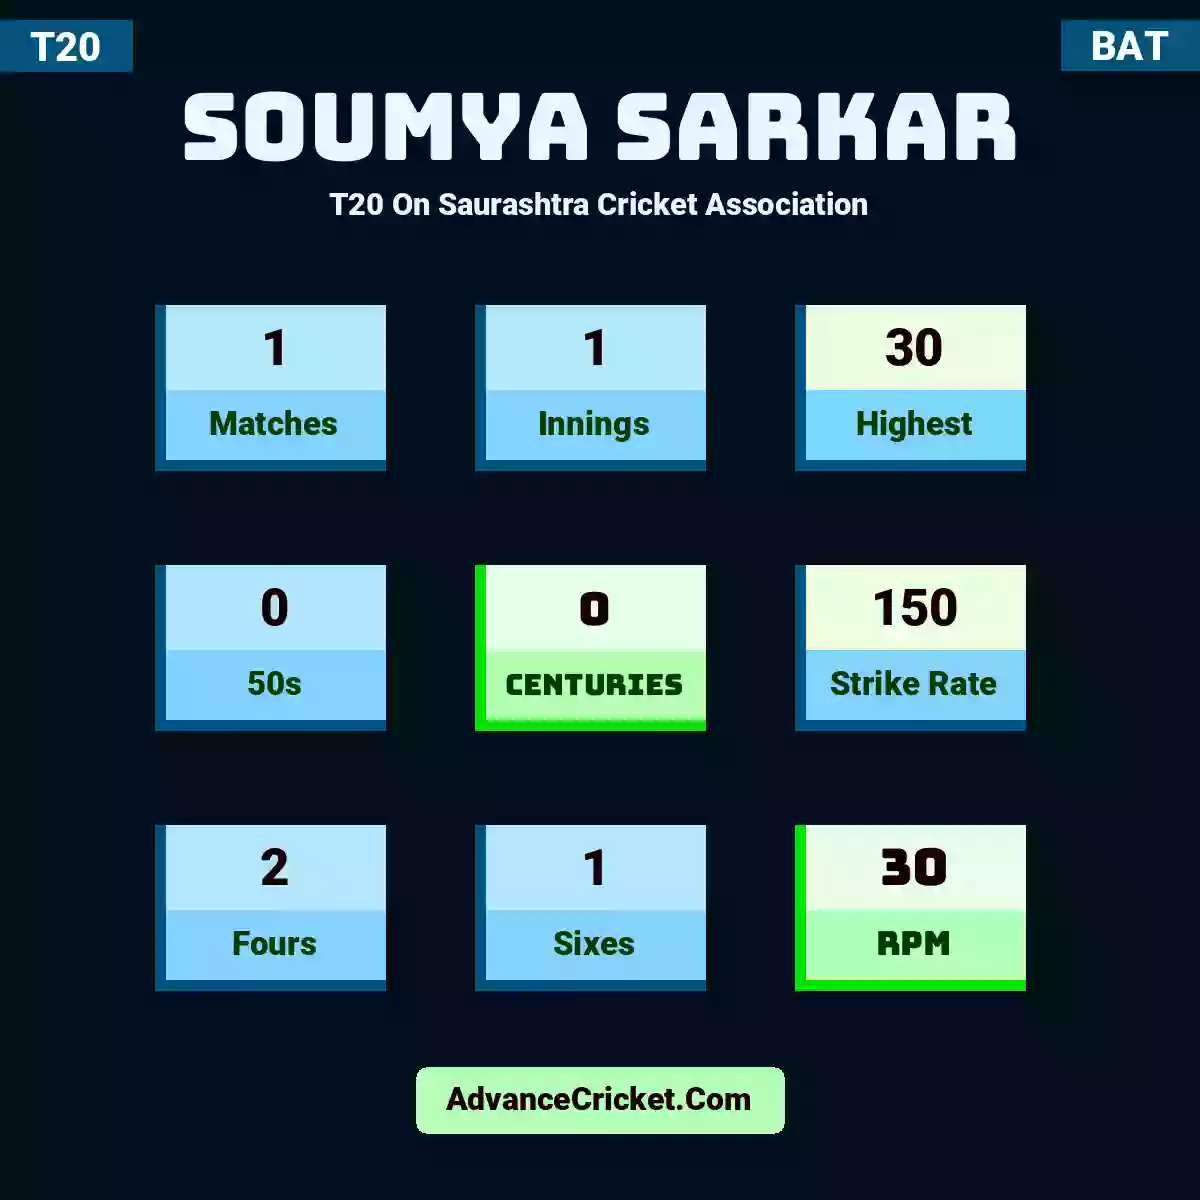 Soumya Sarkar T20  On Saurashtra Cricket Association, Soumya Sarkar played 1 matches, scored 30 runs as highest, 0 half-centuries, and 0 centuries, with a strike rate of 150. S.Sarkar hit 2 fours and 1 sixes, with an RPM of 30.